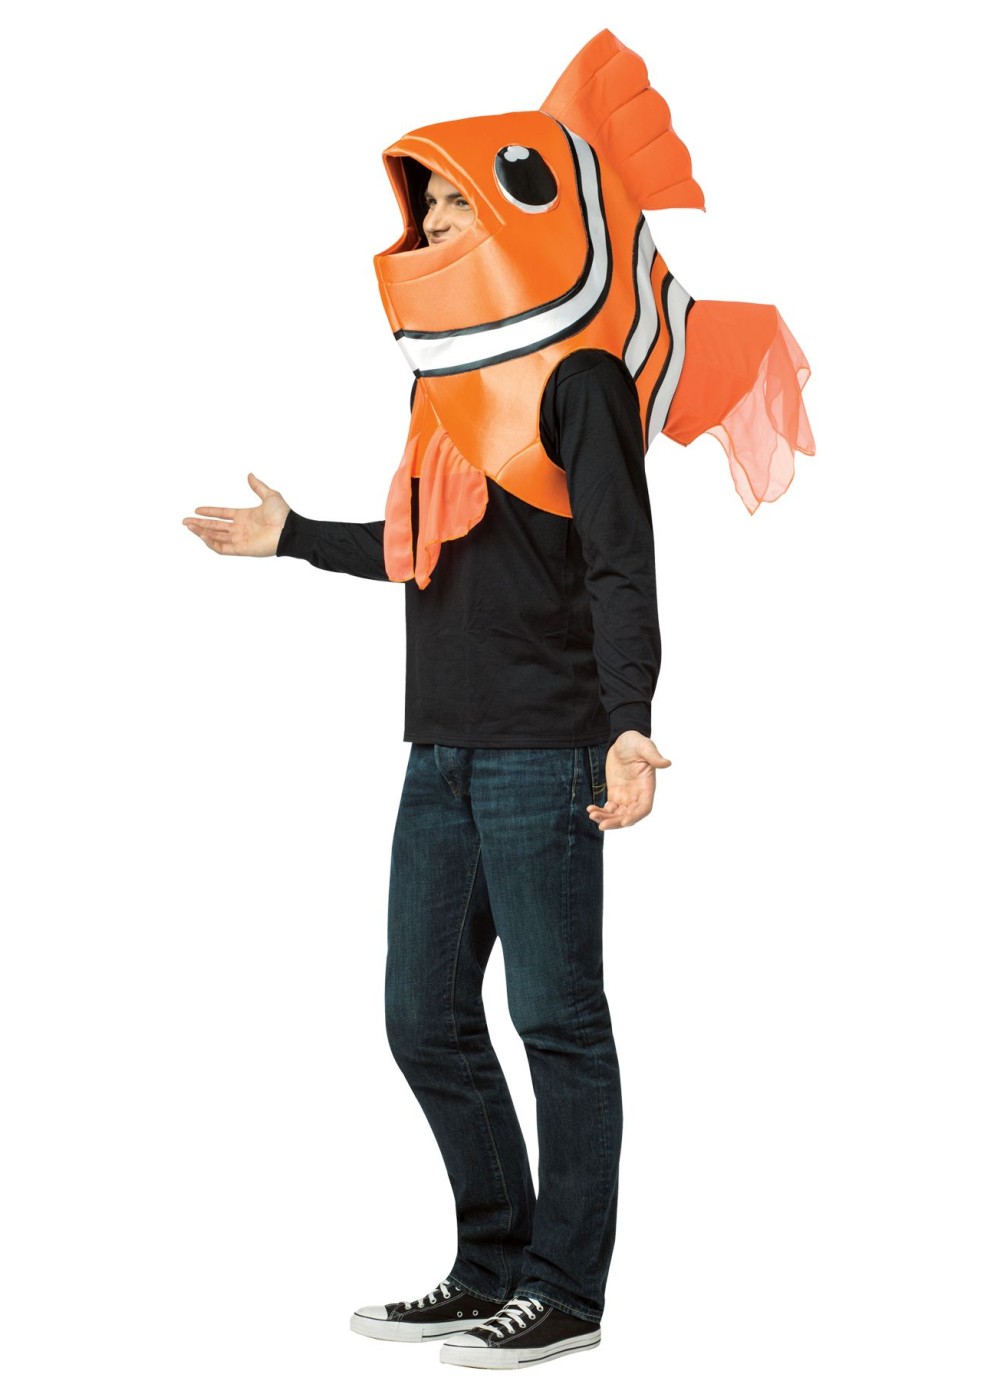 Finding Nemo Clown Fish Headpiece